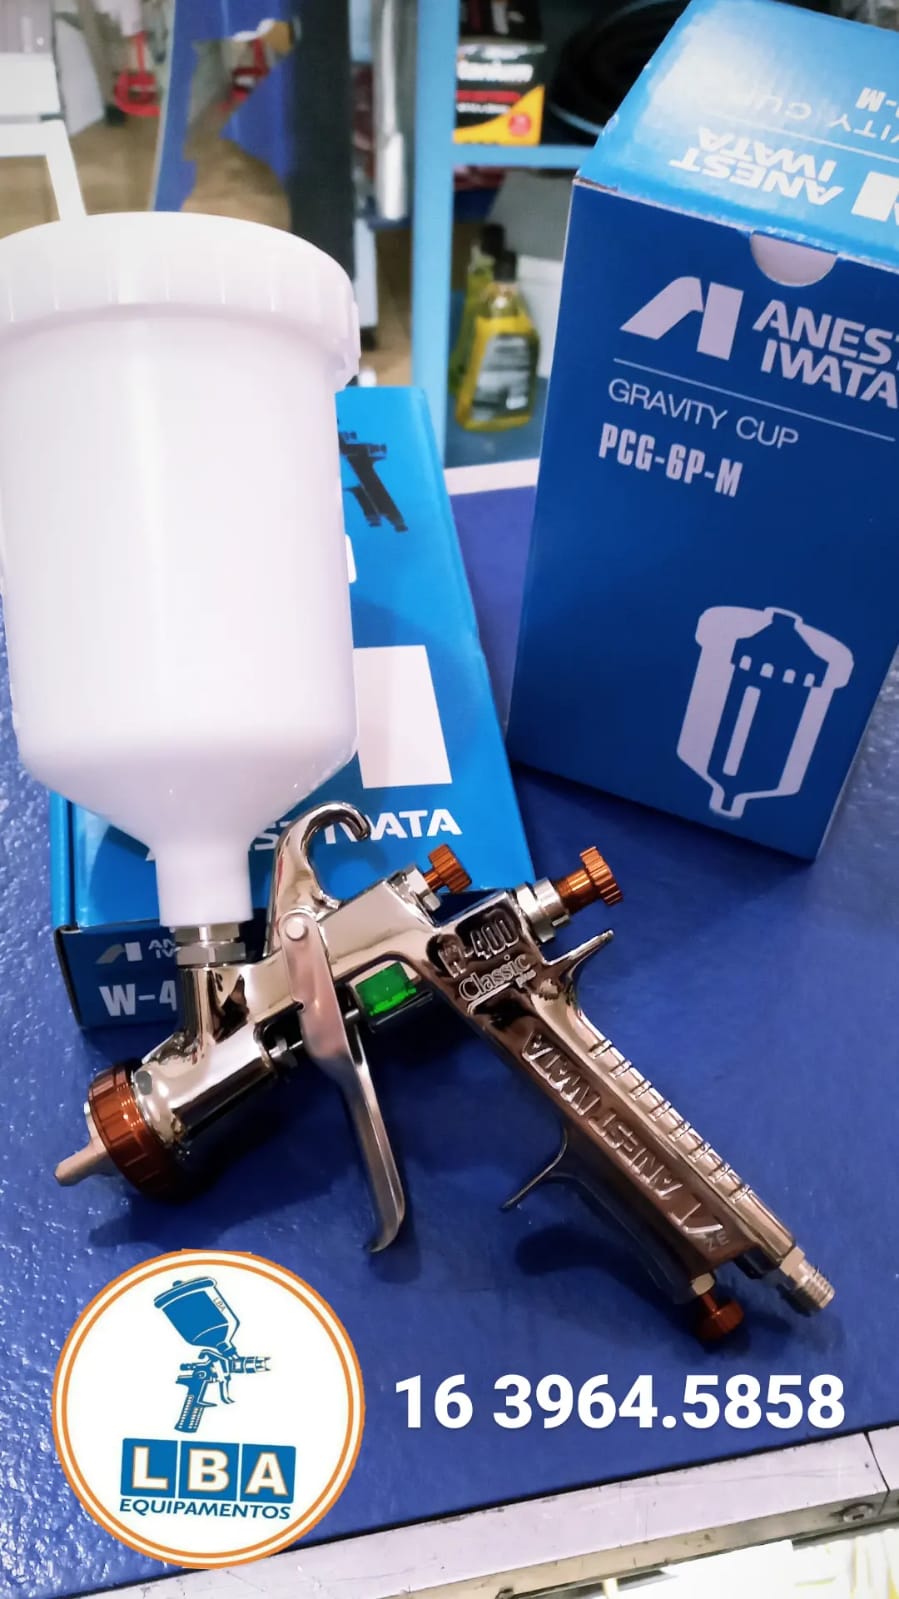 Pistola de pintura W-400 BELLARIA - Anest-Iwata